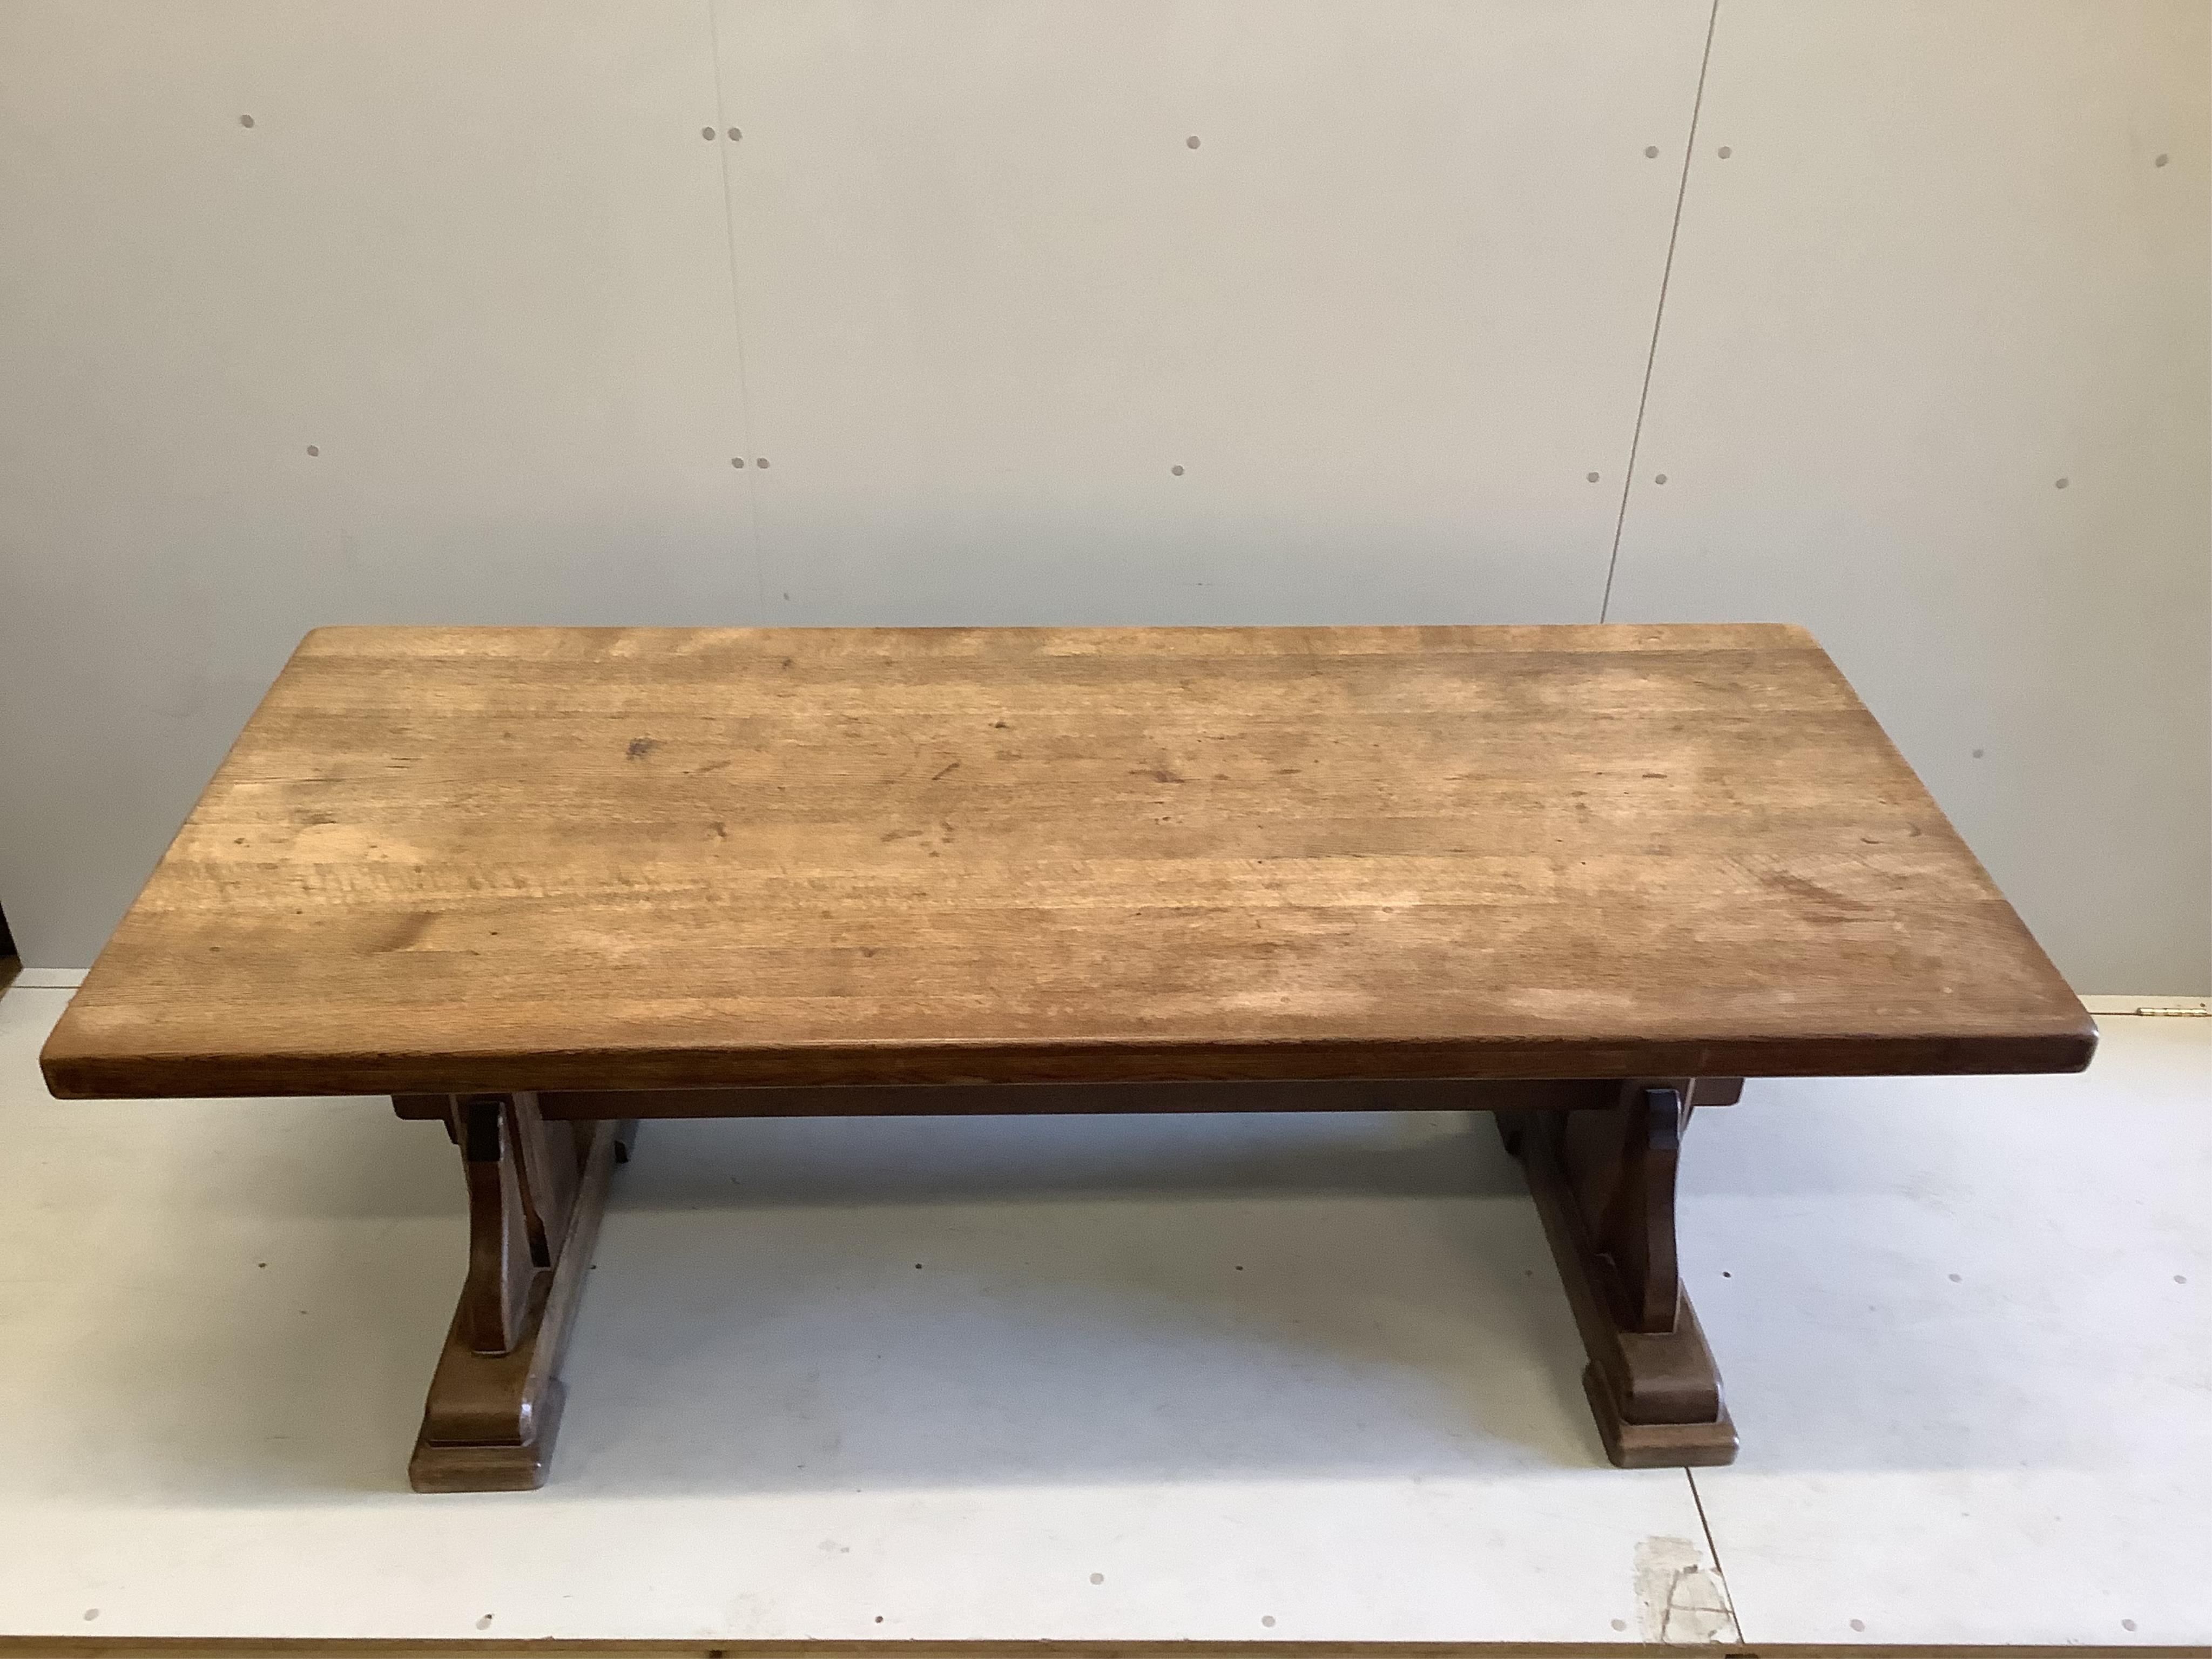 An 18th century style rectangular oak refectory dining table, width 200cm, depth 89cm, height 75cm. Condition - fair